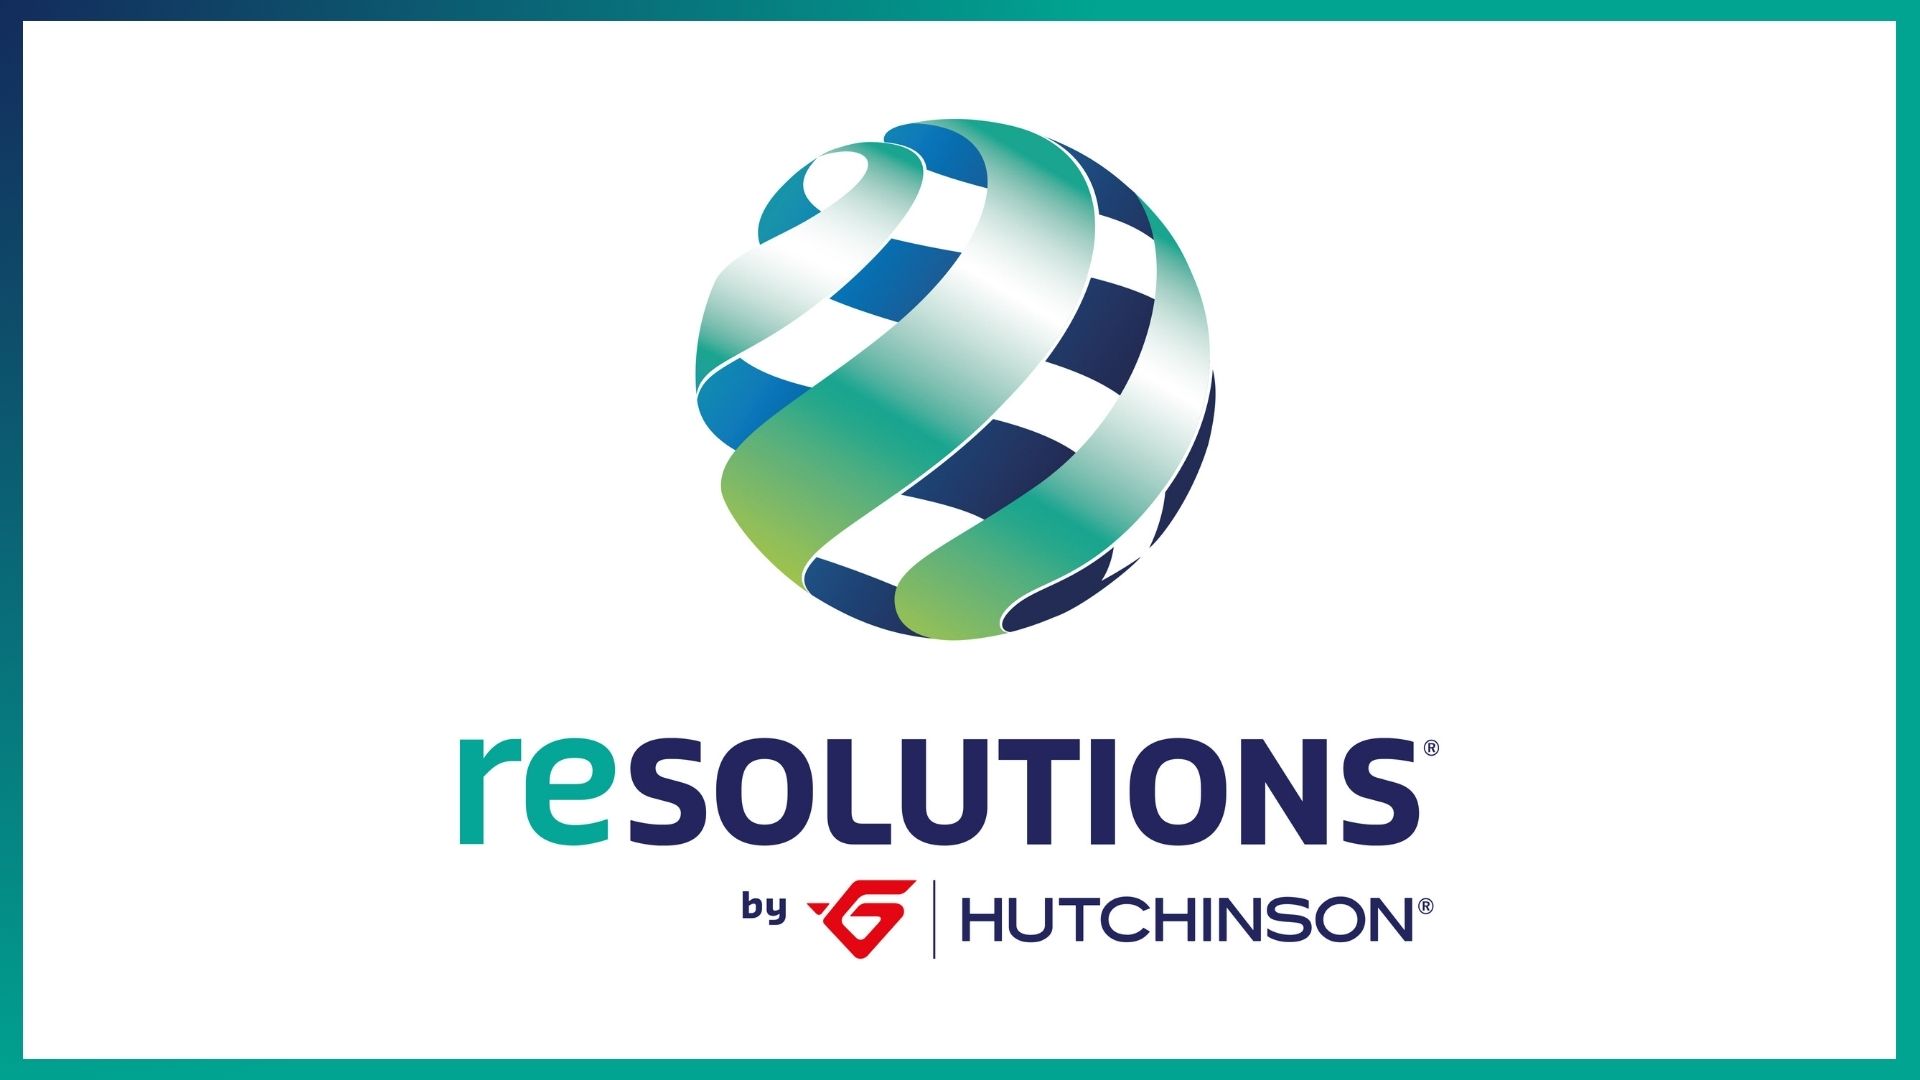 hutchinson resolution